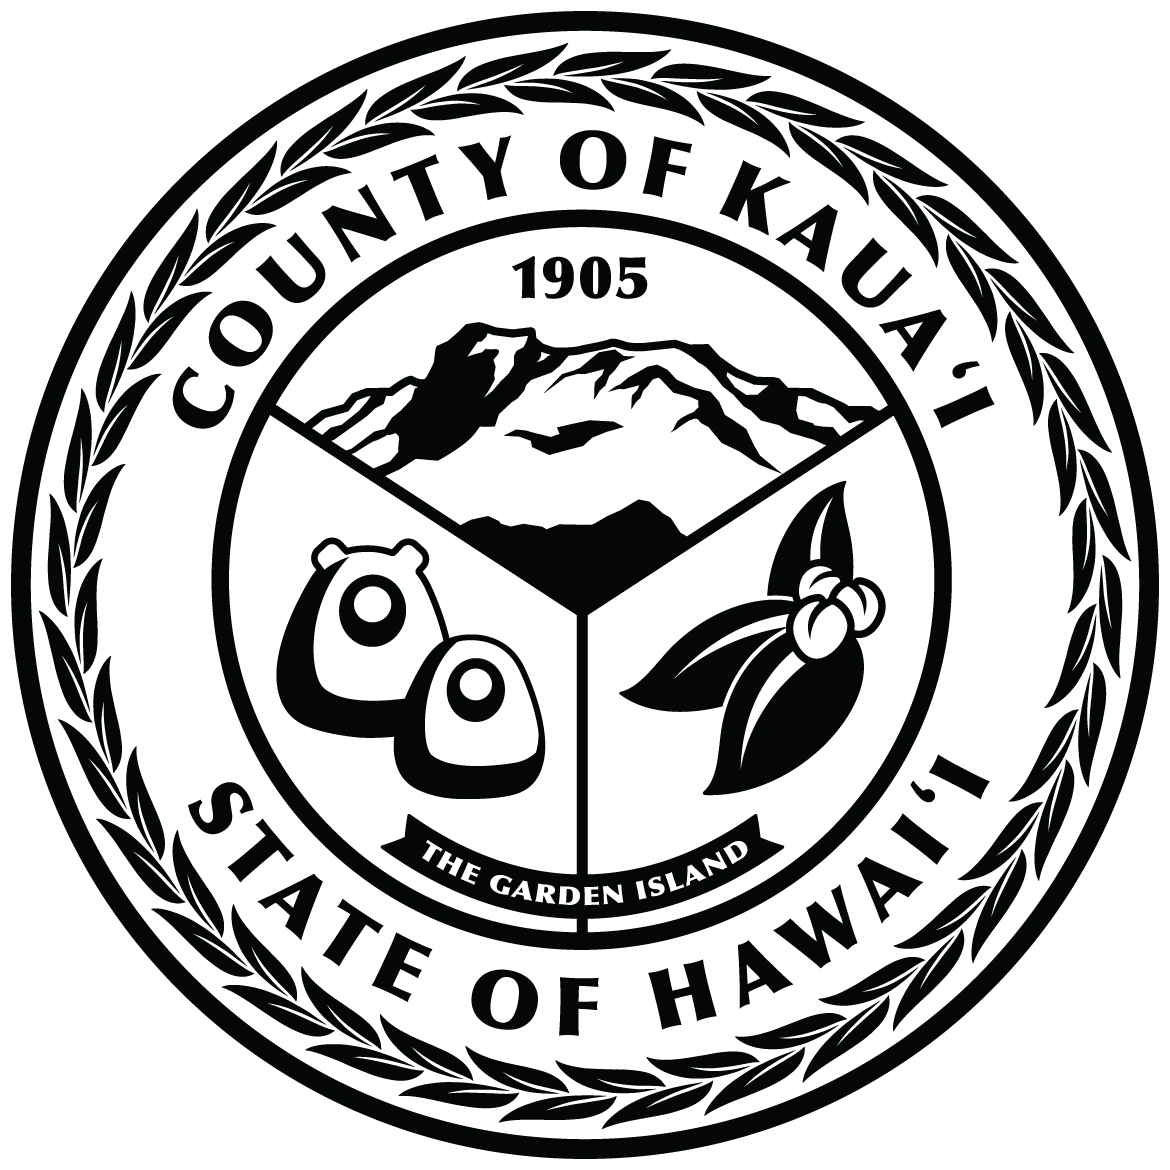 County of Kaua'i, State of Hawai'i